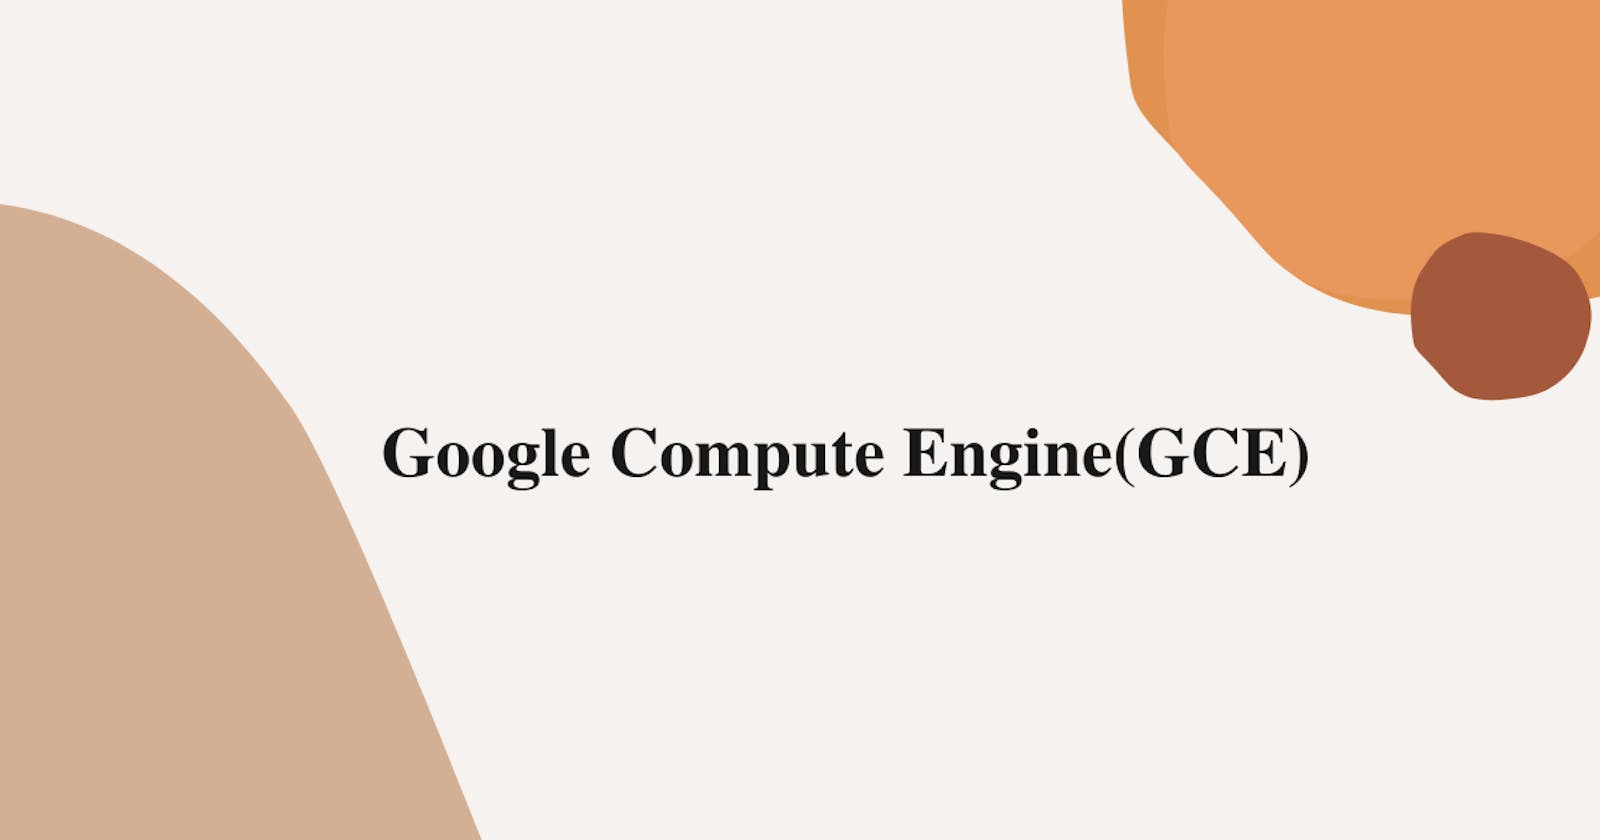 Google Compute Engine(GCE)